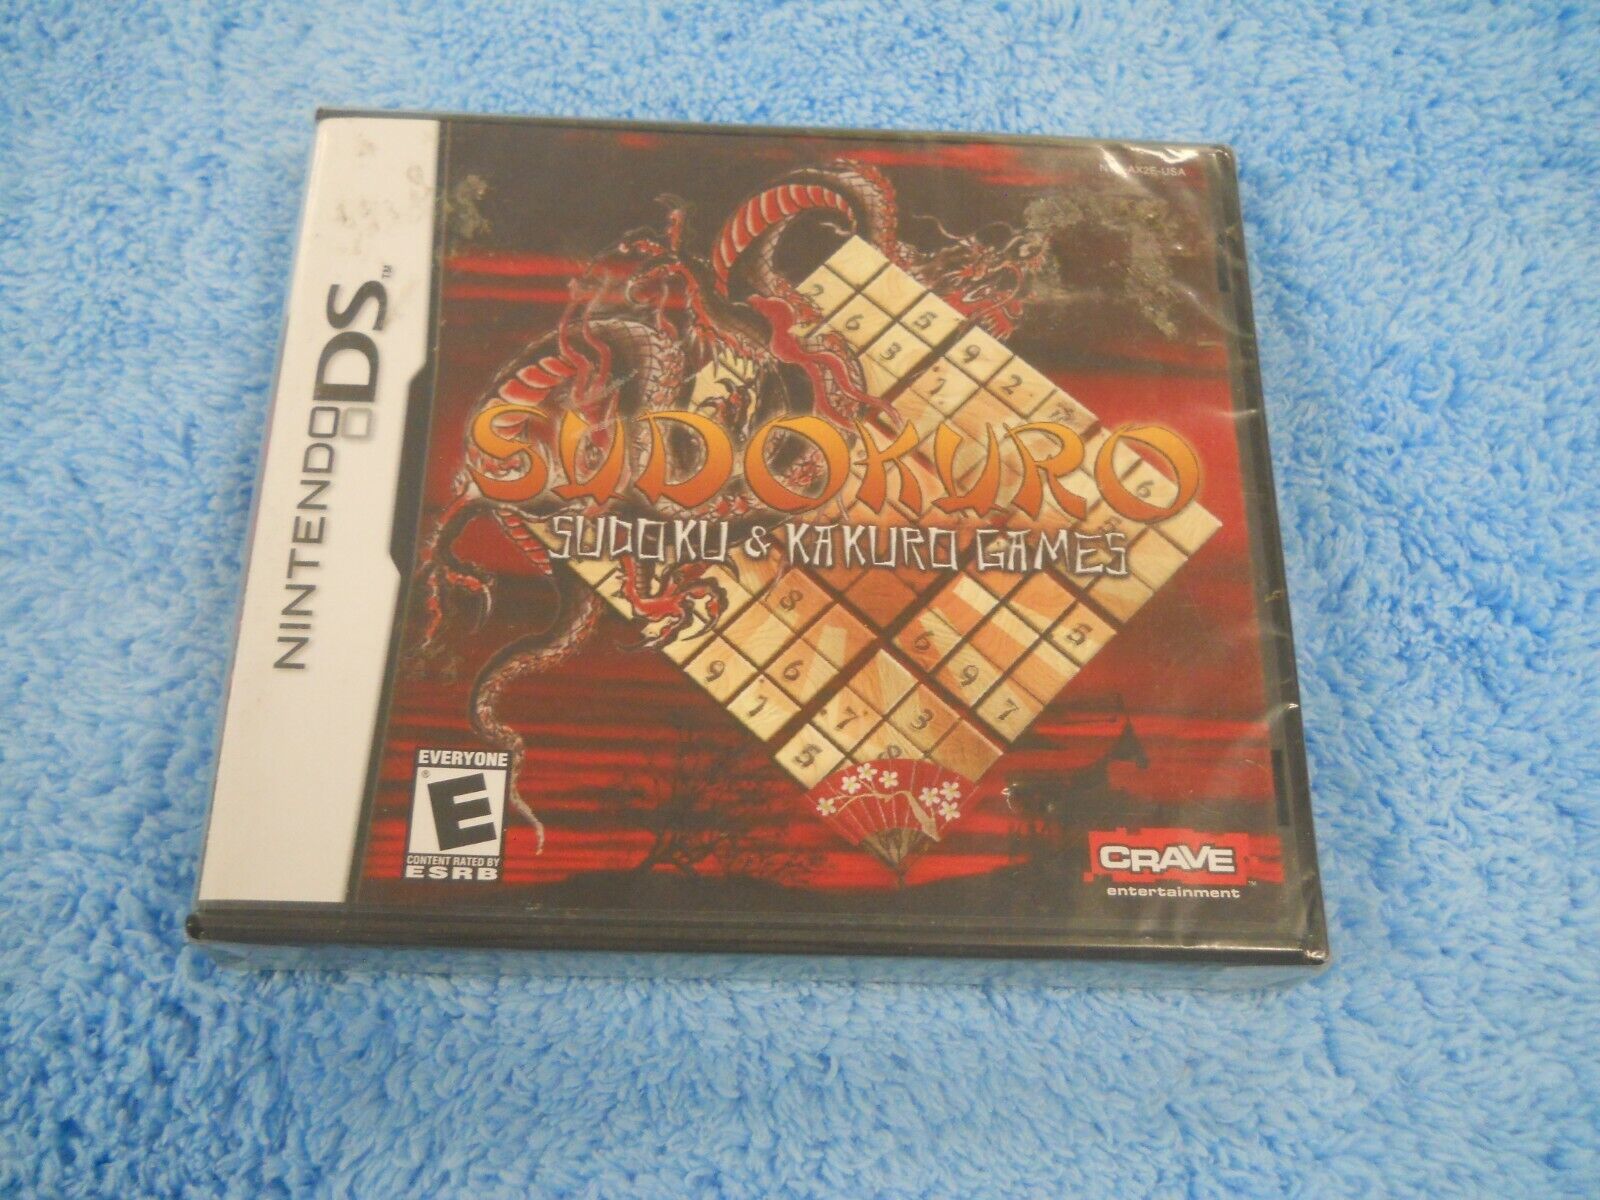 Sudokuro (Nintendo DS, 2007) Brand New Sealed